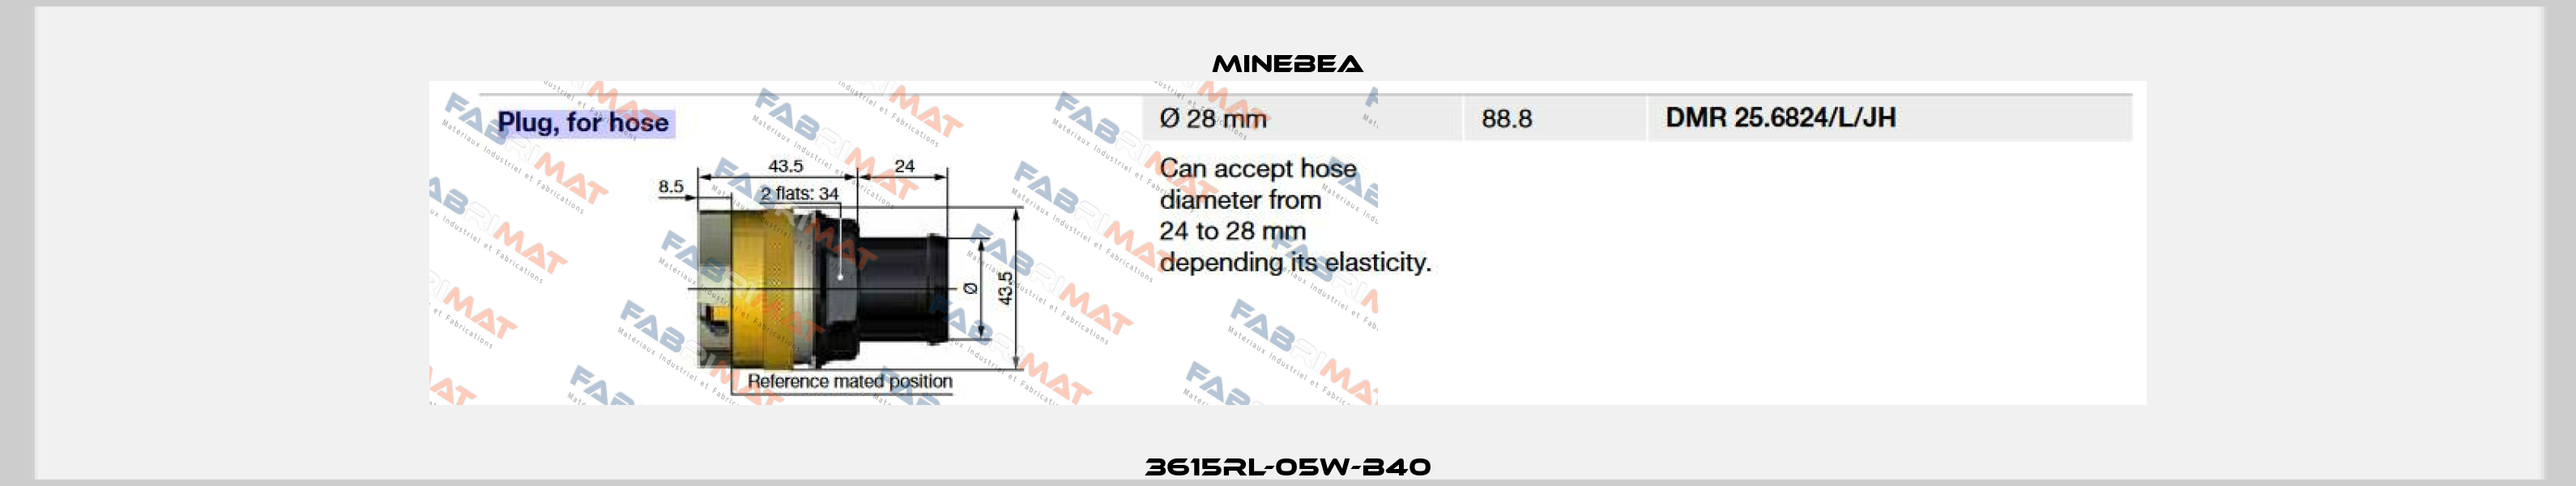 3615RL-05W-B40 Minebea